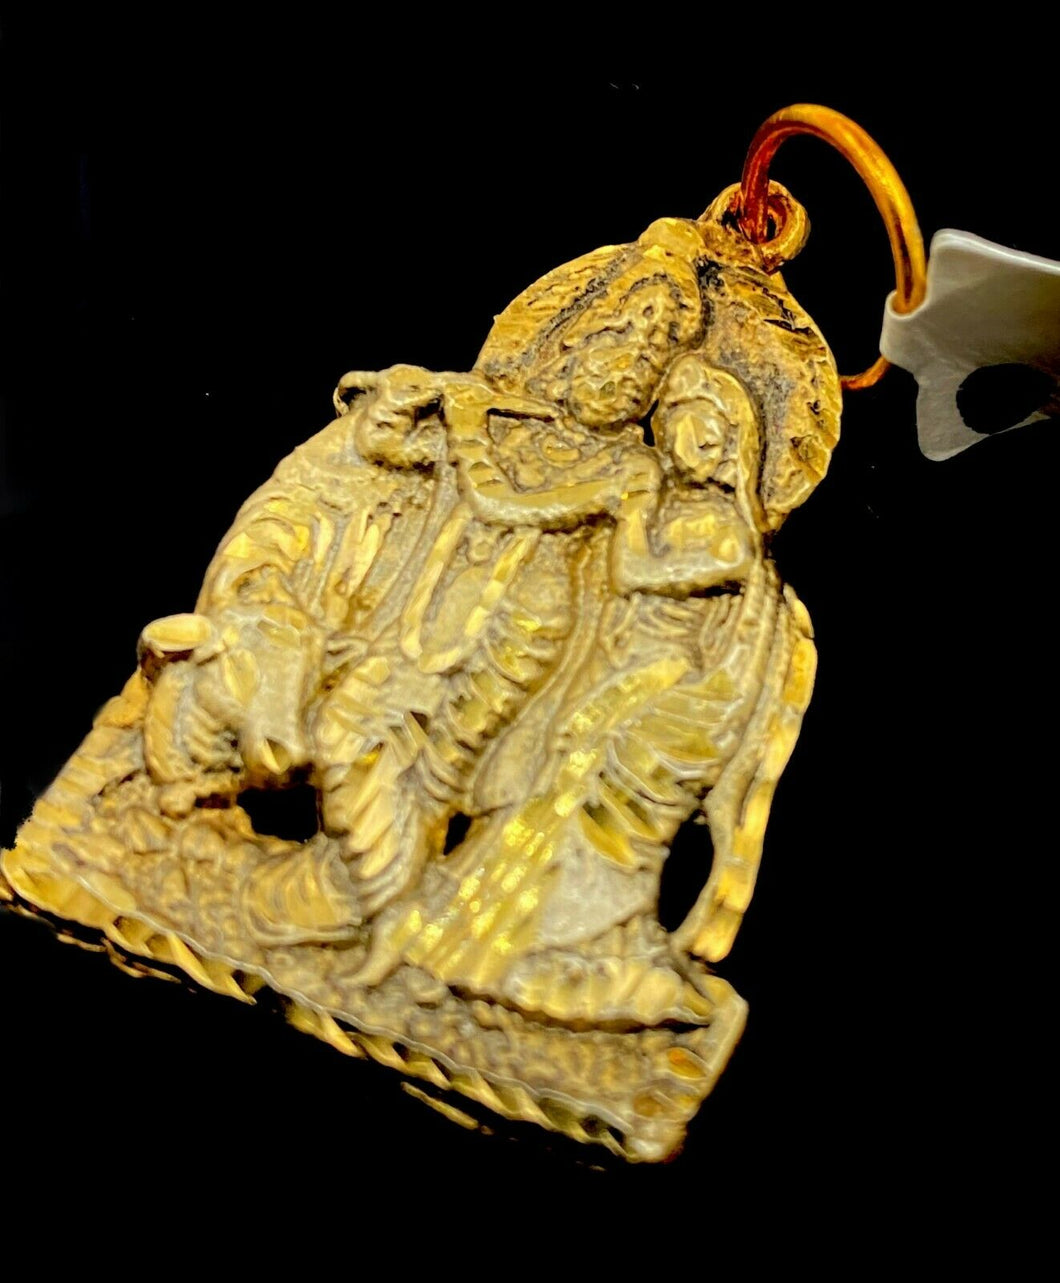 22k Solid Gold ELEGANT Diamond Cut Religious krishna and radha Pendant P1514 - Royal Dubai Jewellers